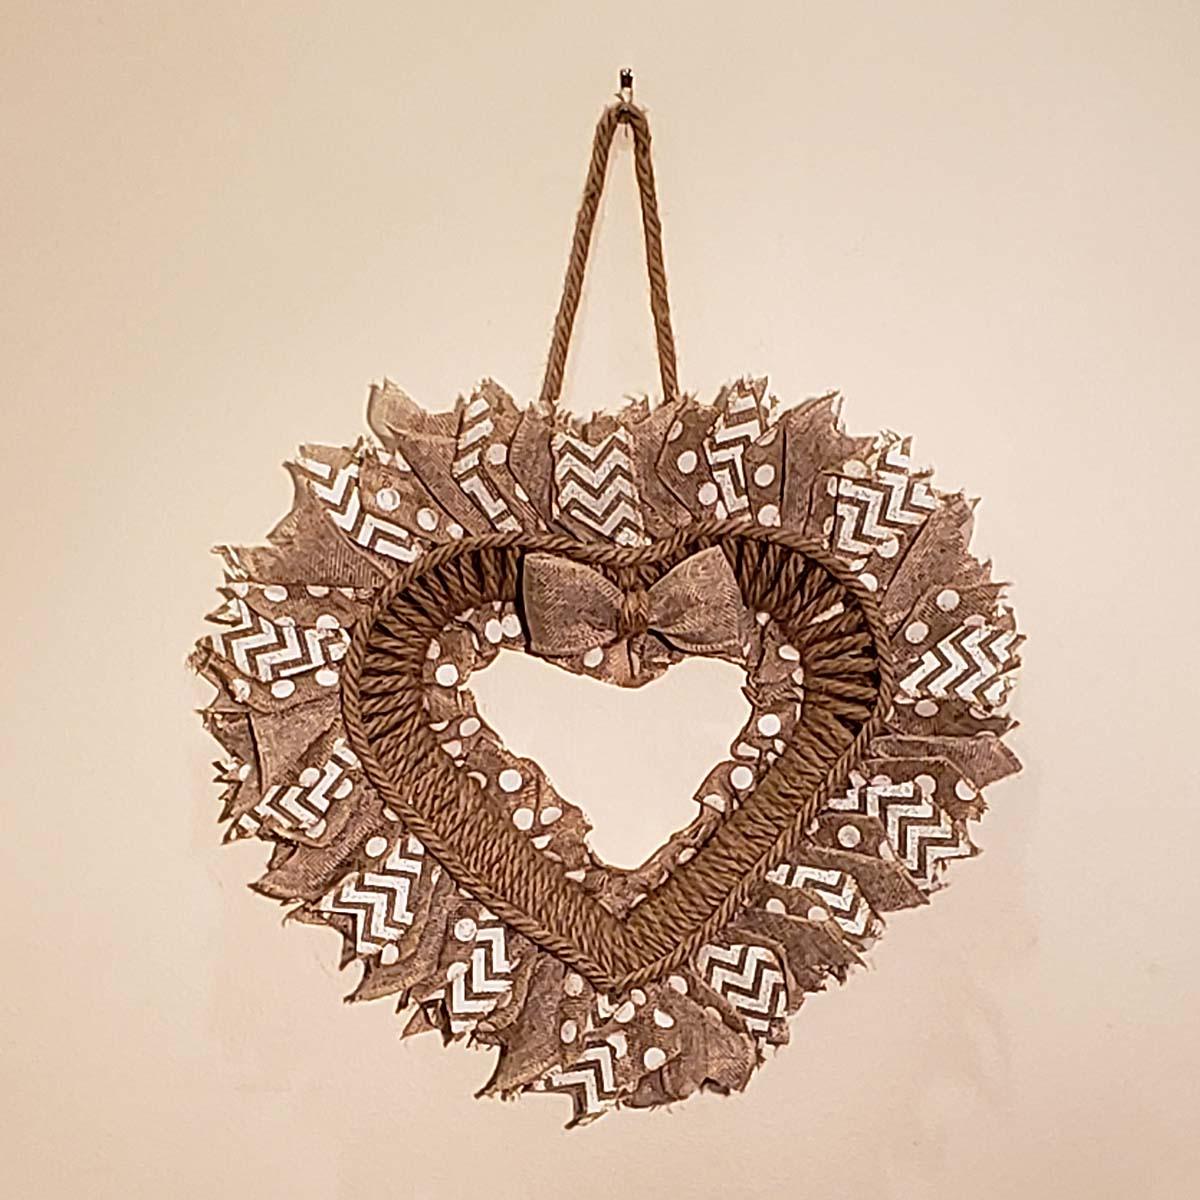 Custom Burlap Heart Wreath w/Initial - Spouse-ly